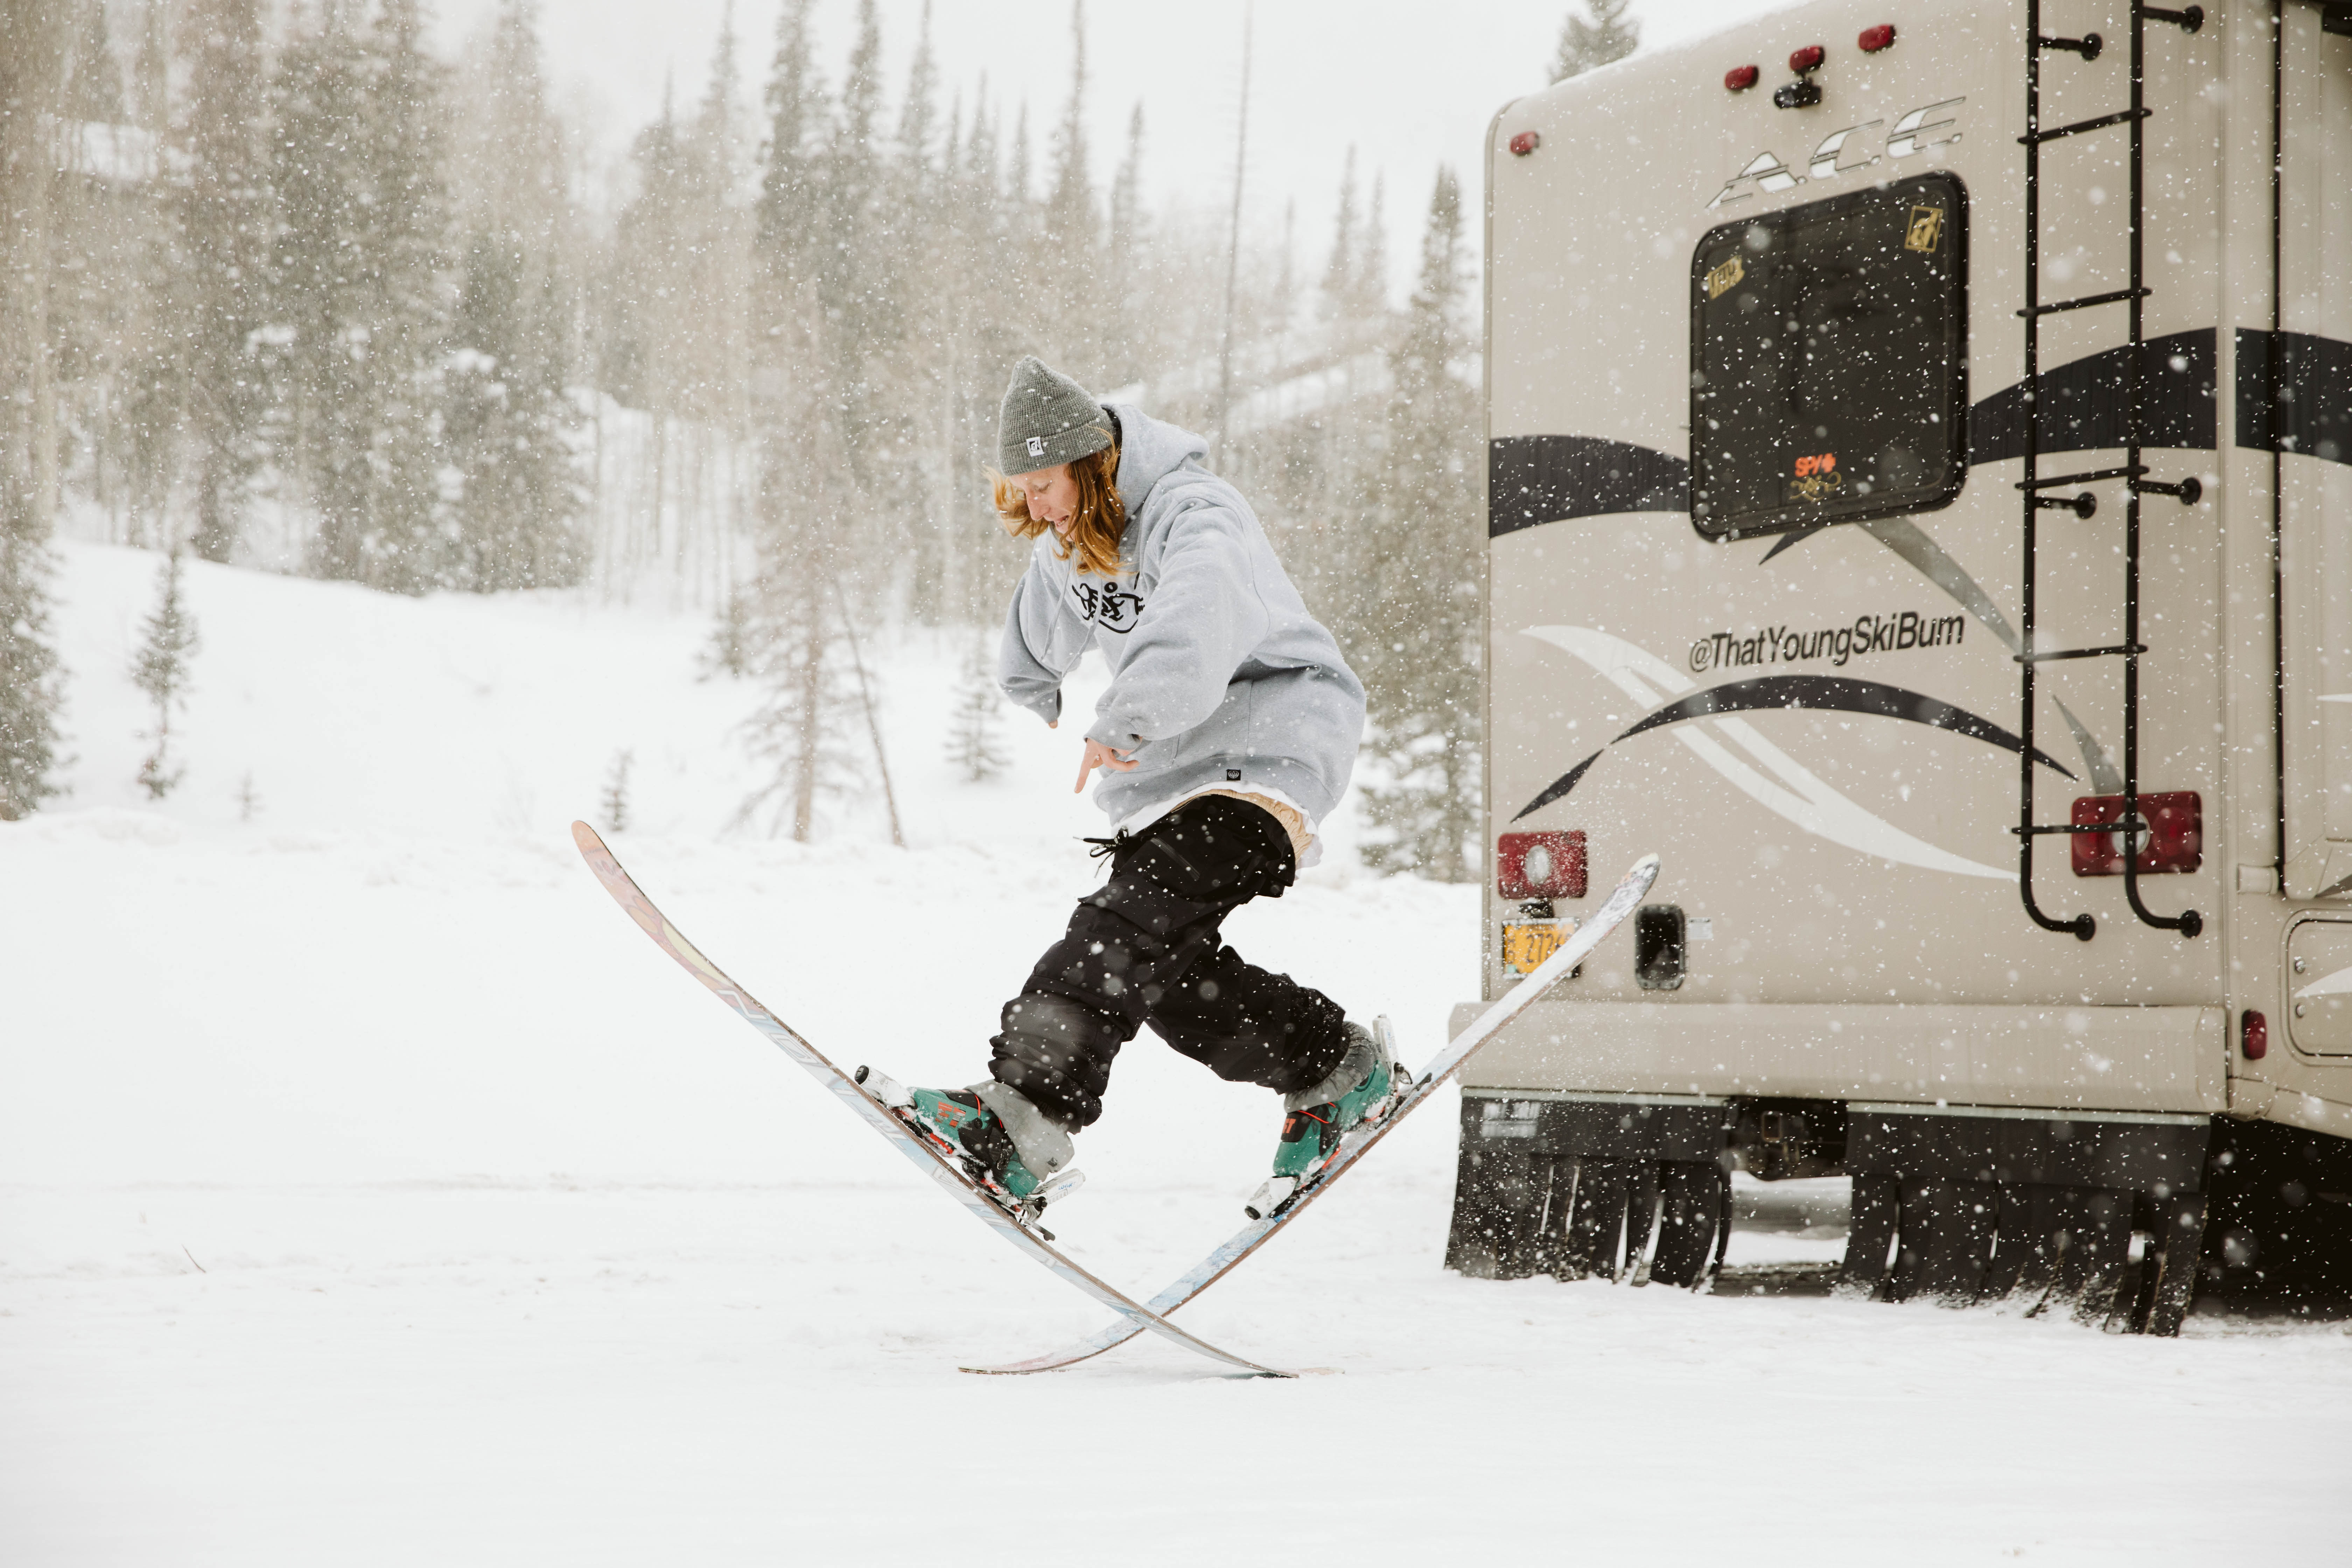 How Ryan Barrick uses his RV to travel and ski year-round